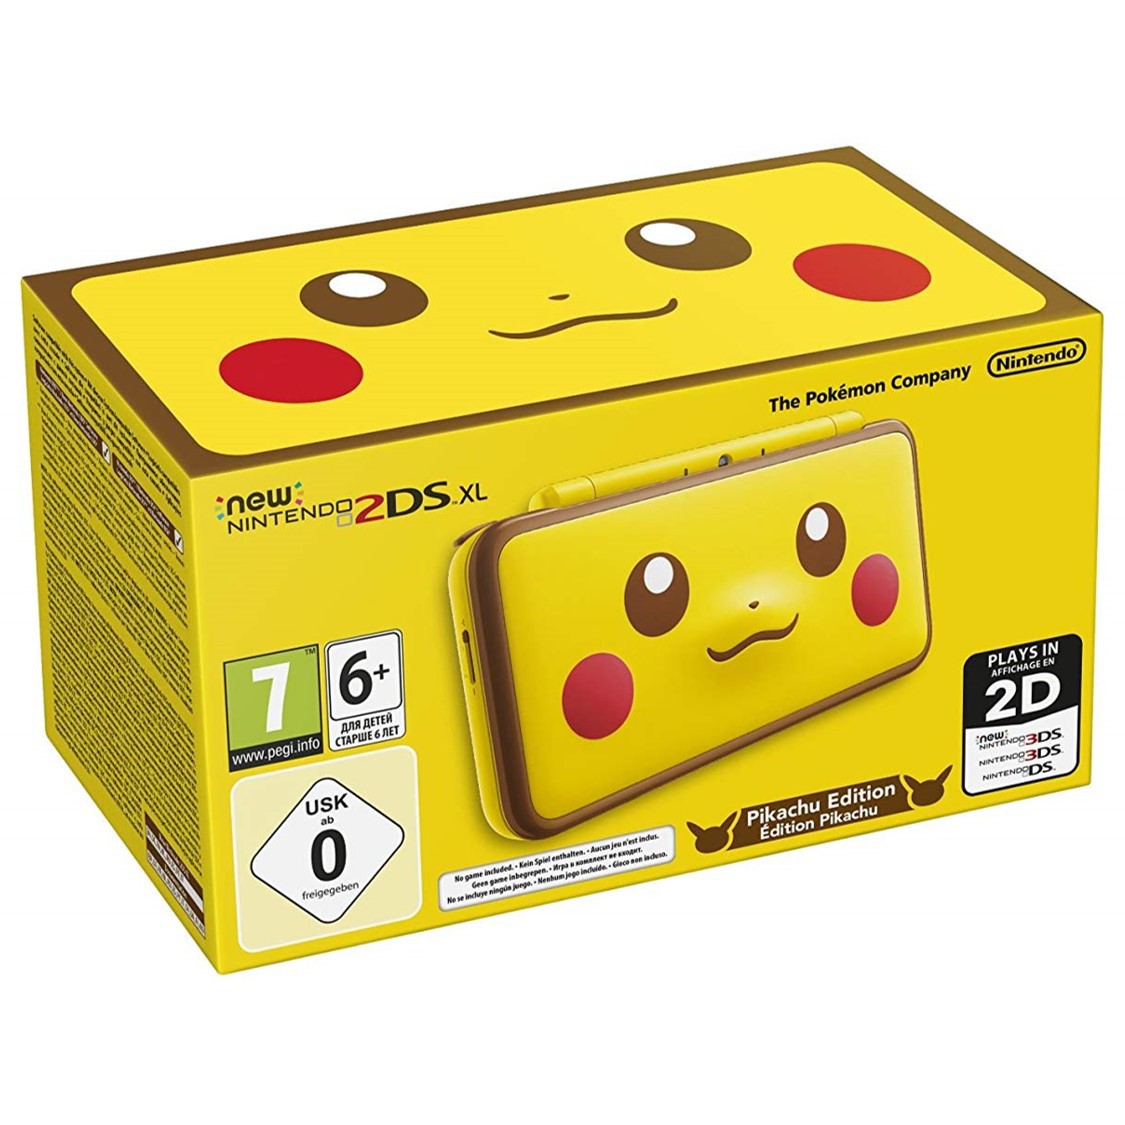 New Nintendo 2DS XL - Pikachu Edition [Complete] - Nintendo 3DS Hardware